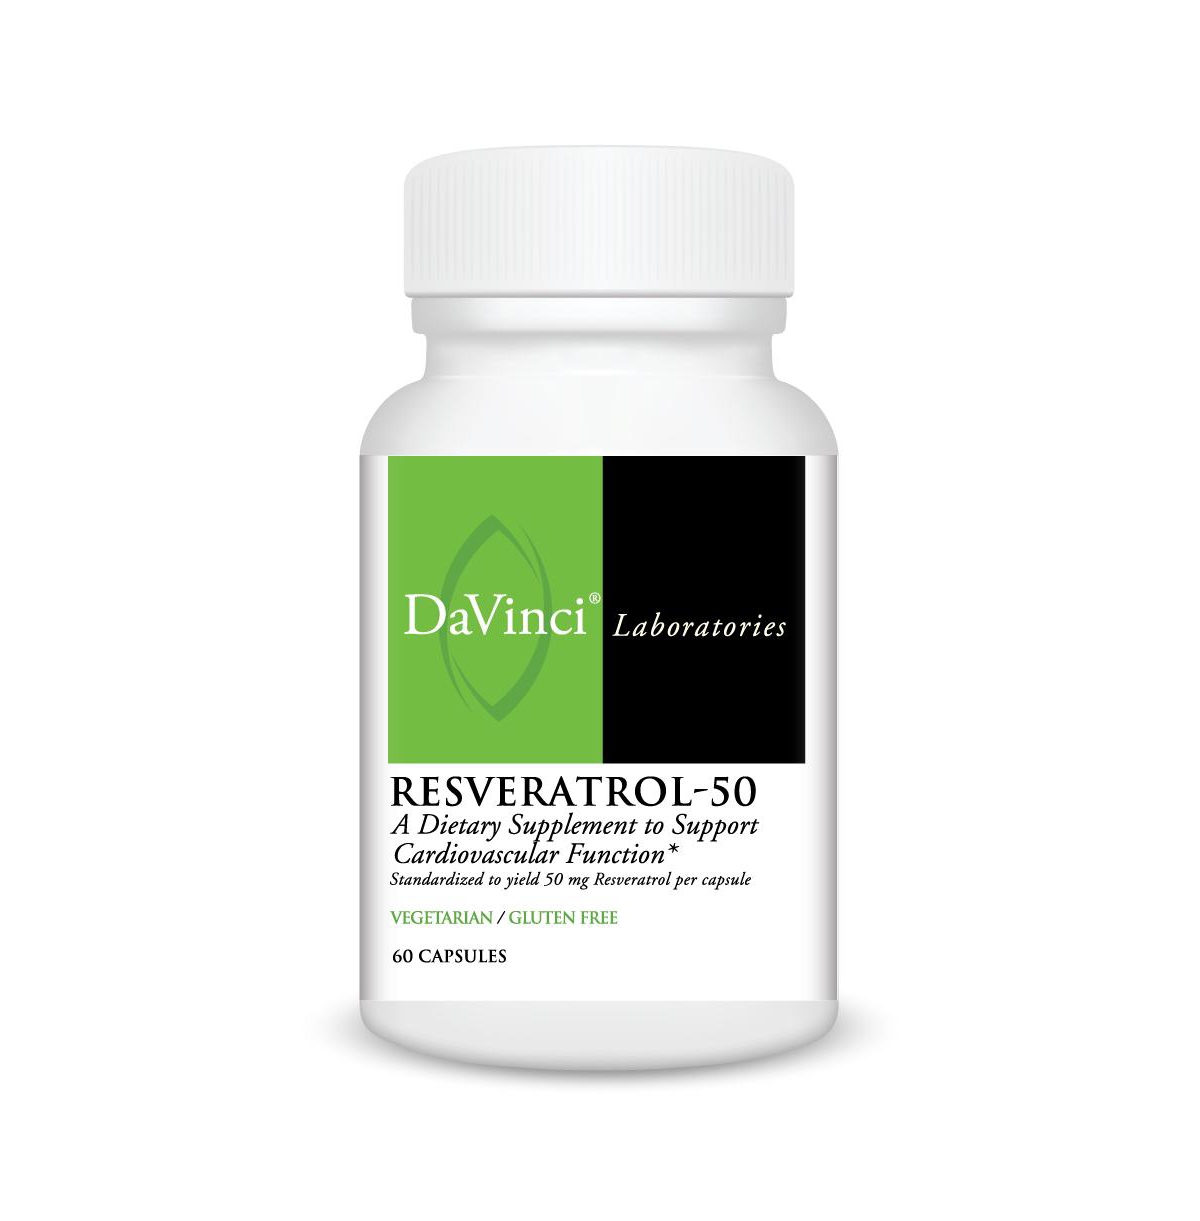 DaVinci - Resveratrol-50 - 60 Capsules